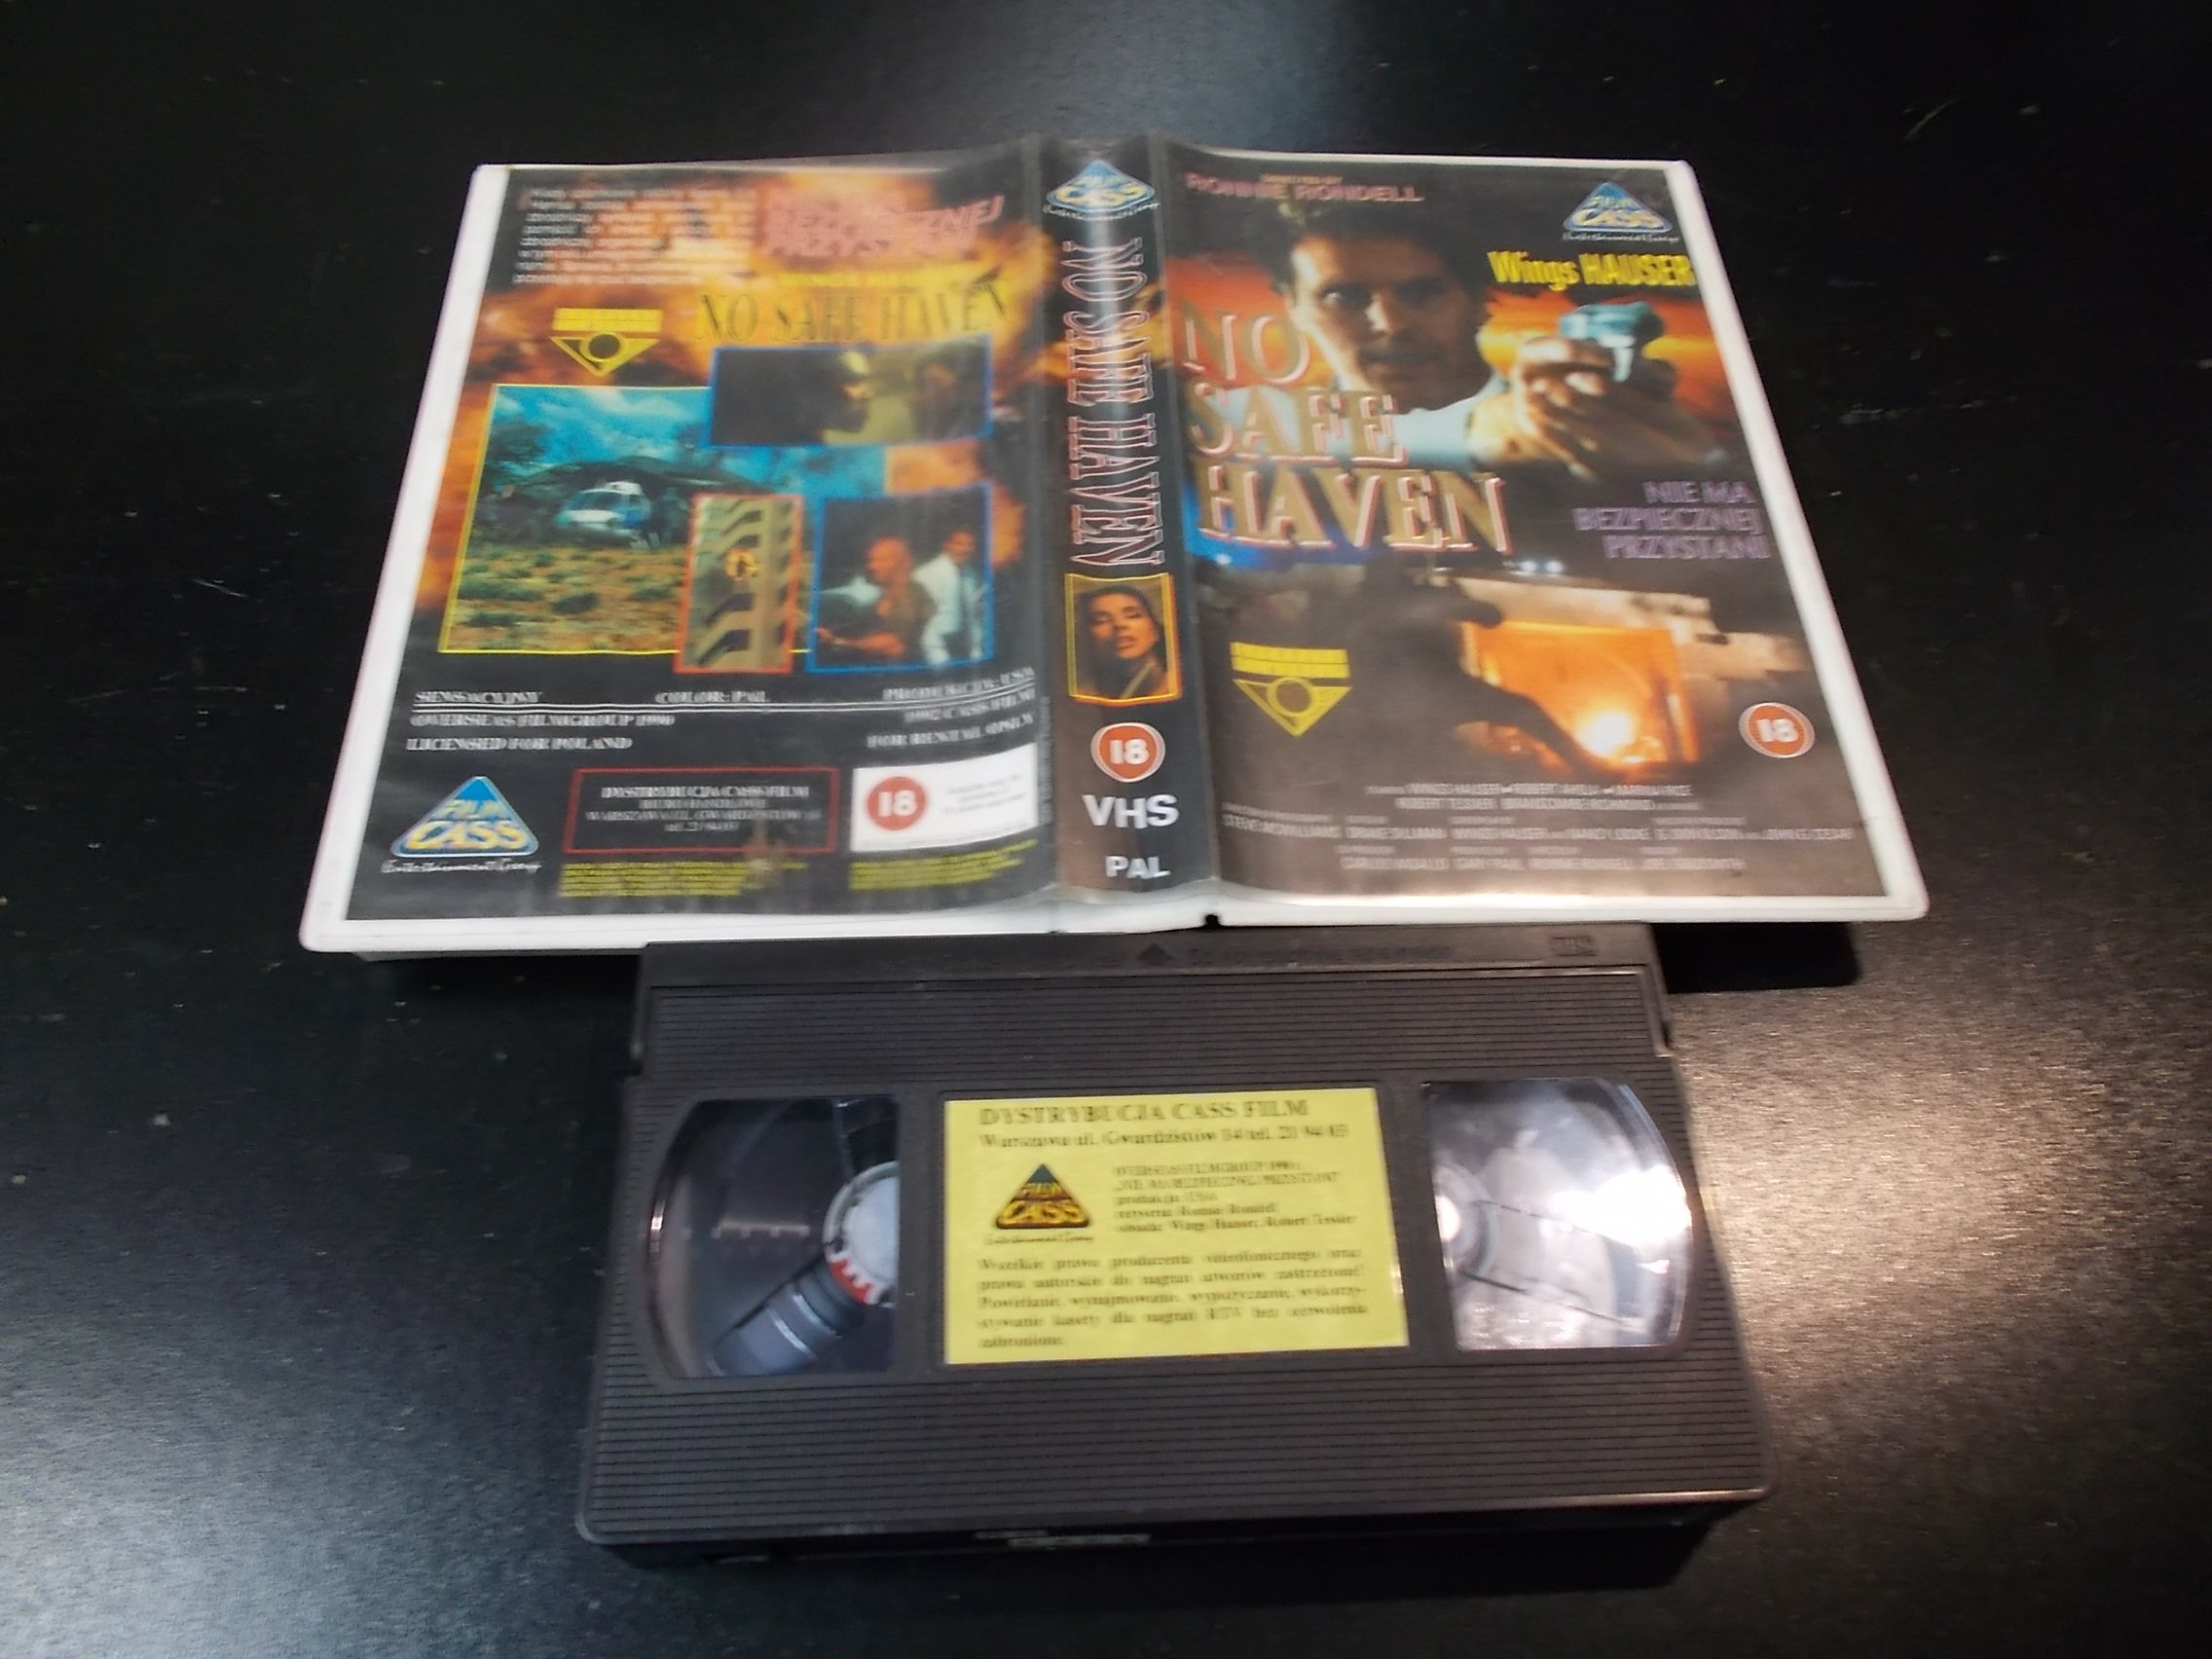 NIE MA BEZPIECZNEJ PRZYSTANI - kaseta Video VHS - 1388 Sklep 